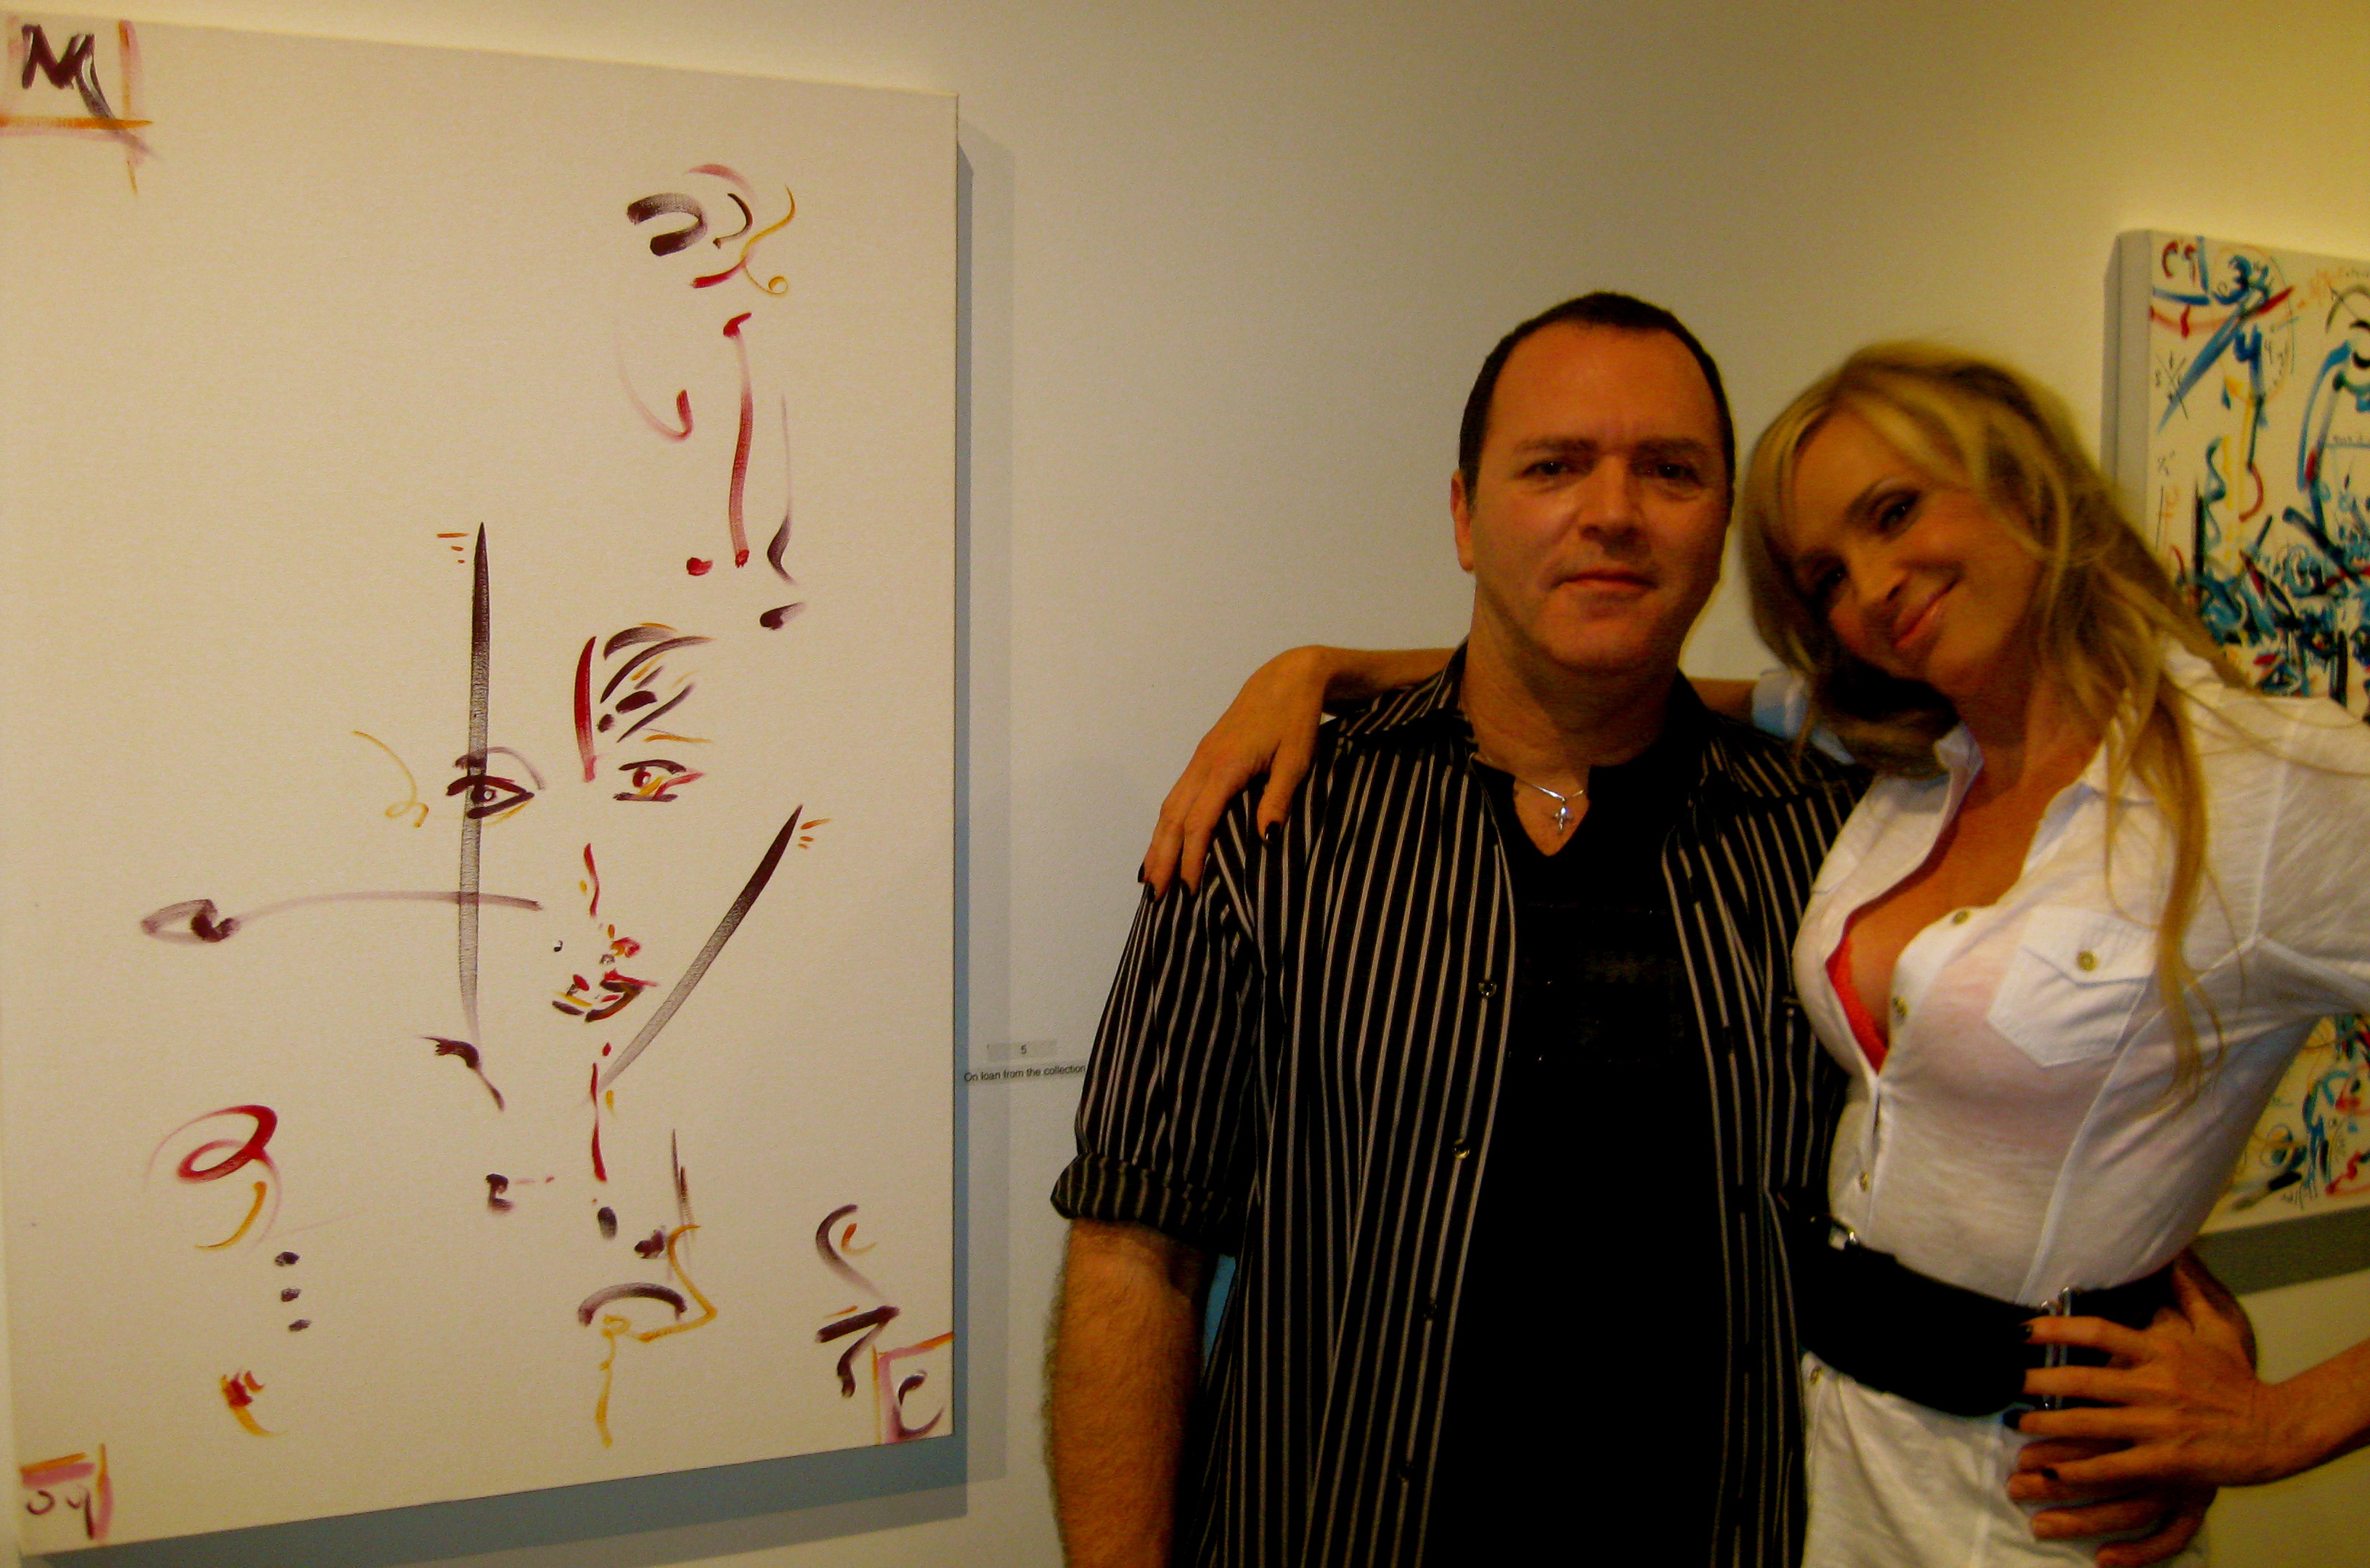 Christopher Ciccone (Madonna's brother/artist) & Karen Campbell (MTV VJ) @ his art exhibit Beverly Hills.